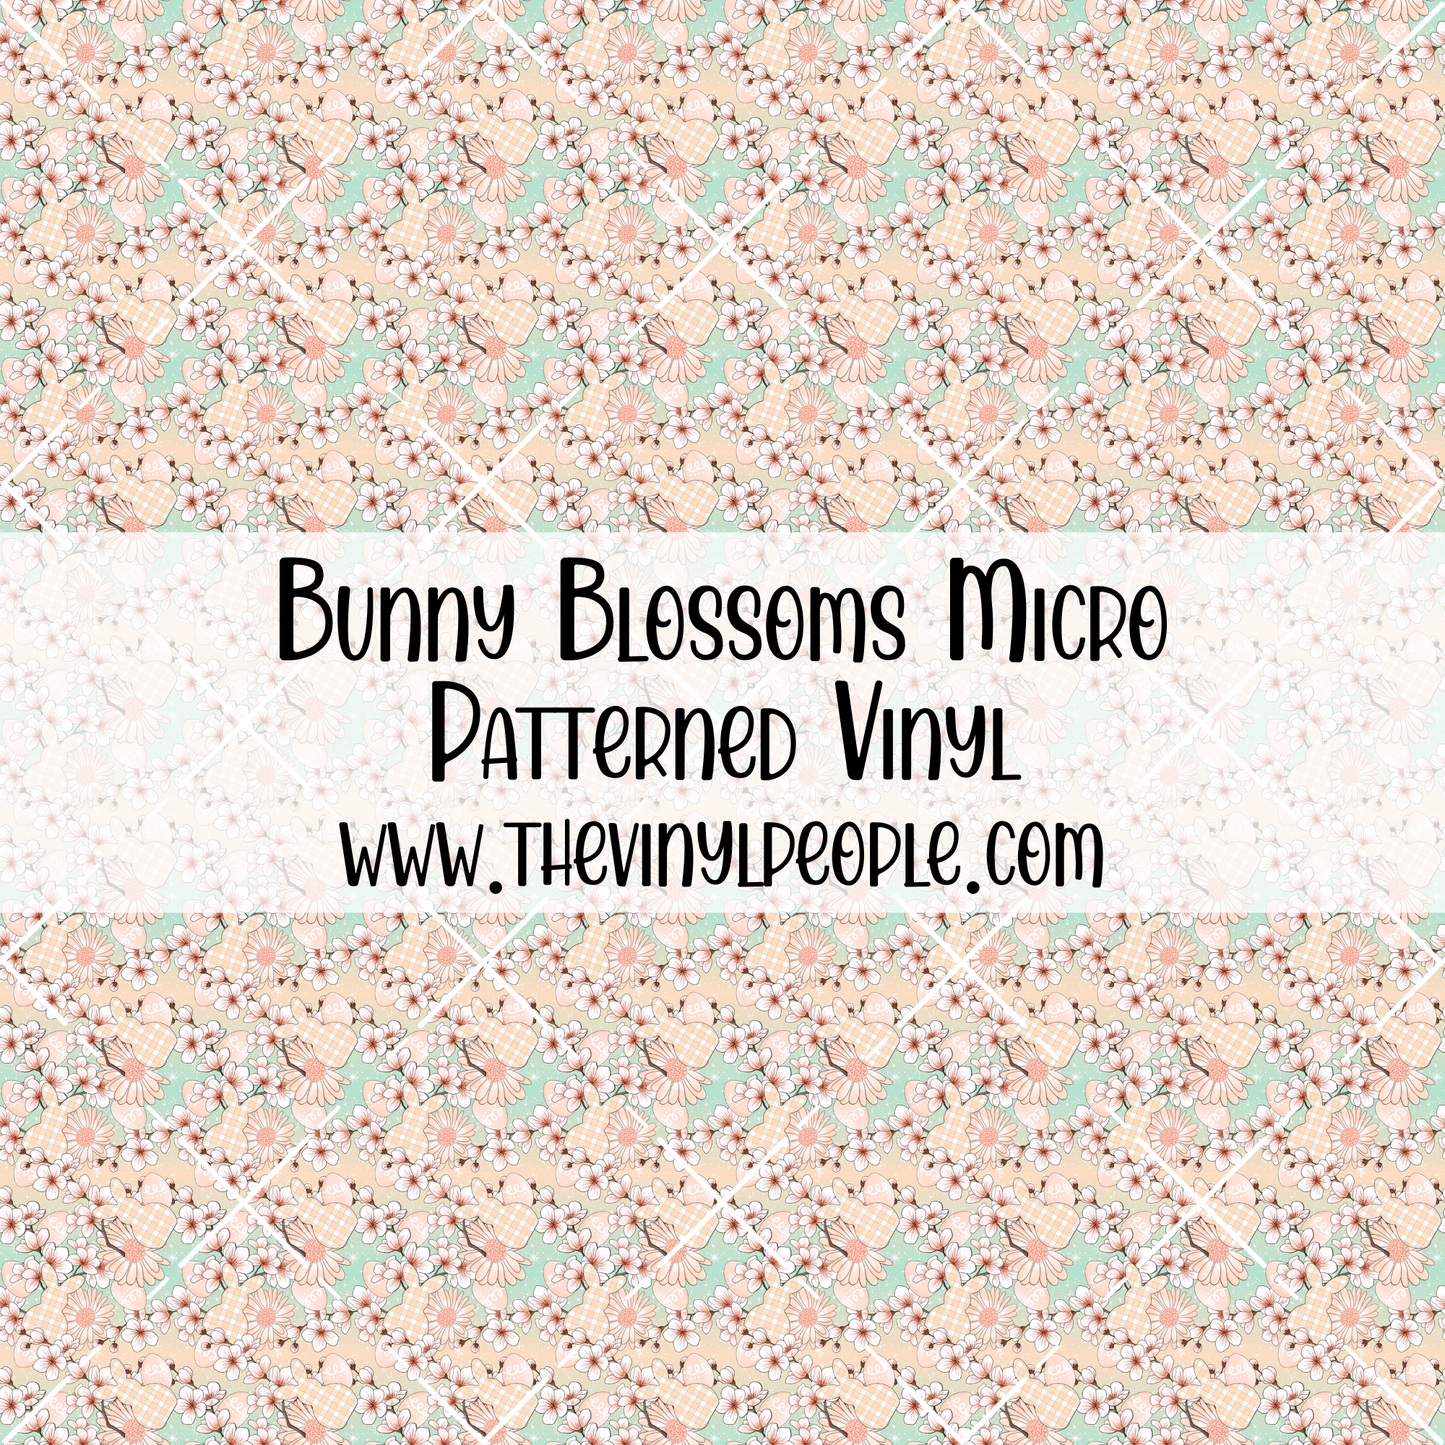 Bunny Blossoms Patterned Vinyl